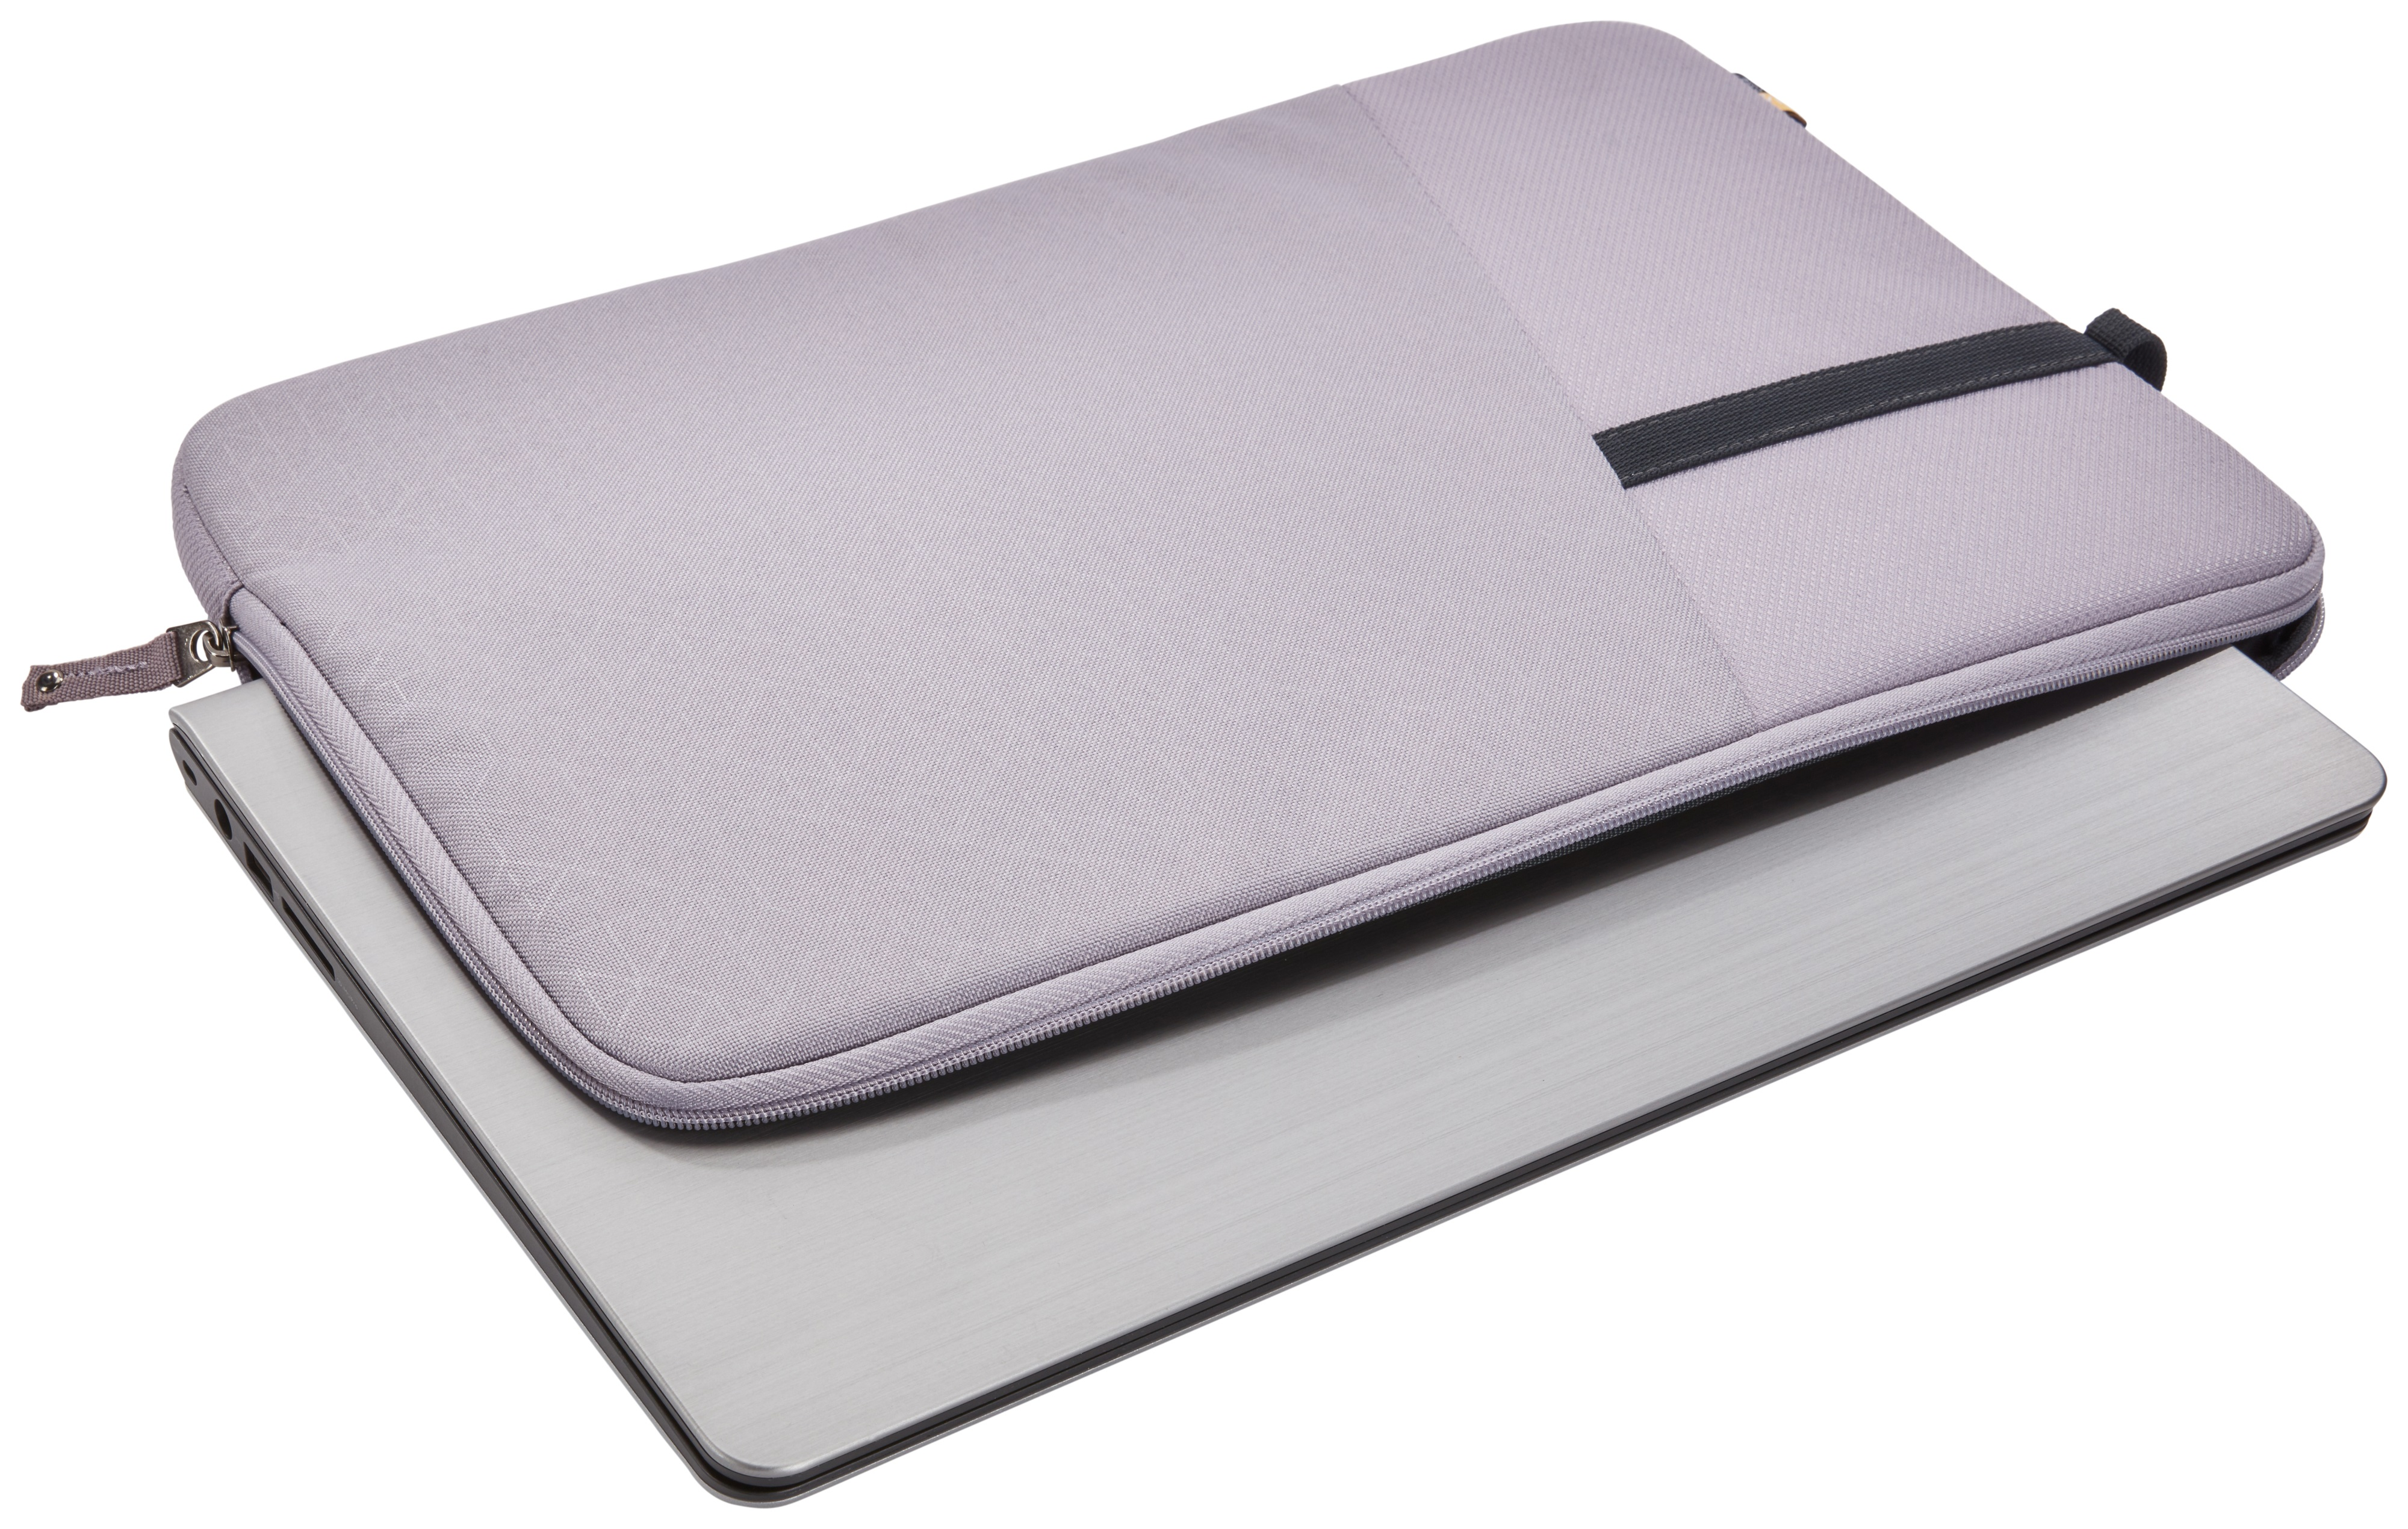 CASE LOGIC Ibira Universal für Polyester, Grau Sleeve Notebooksleeve